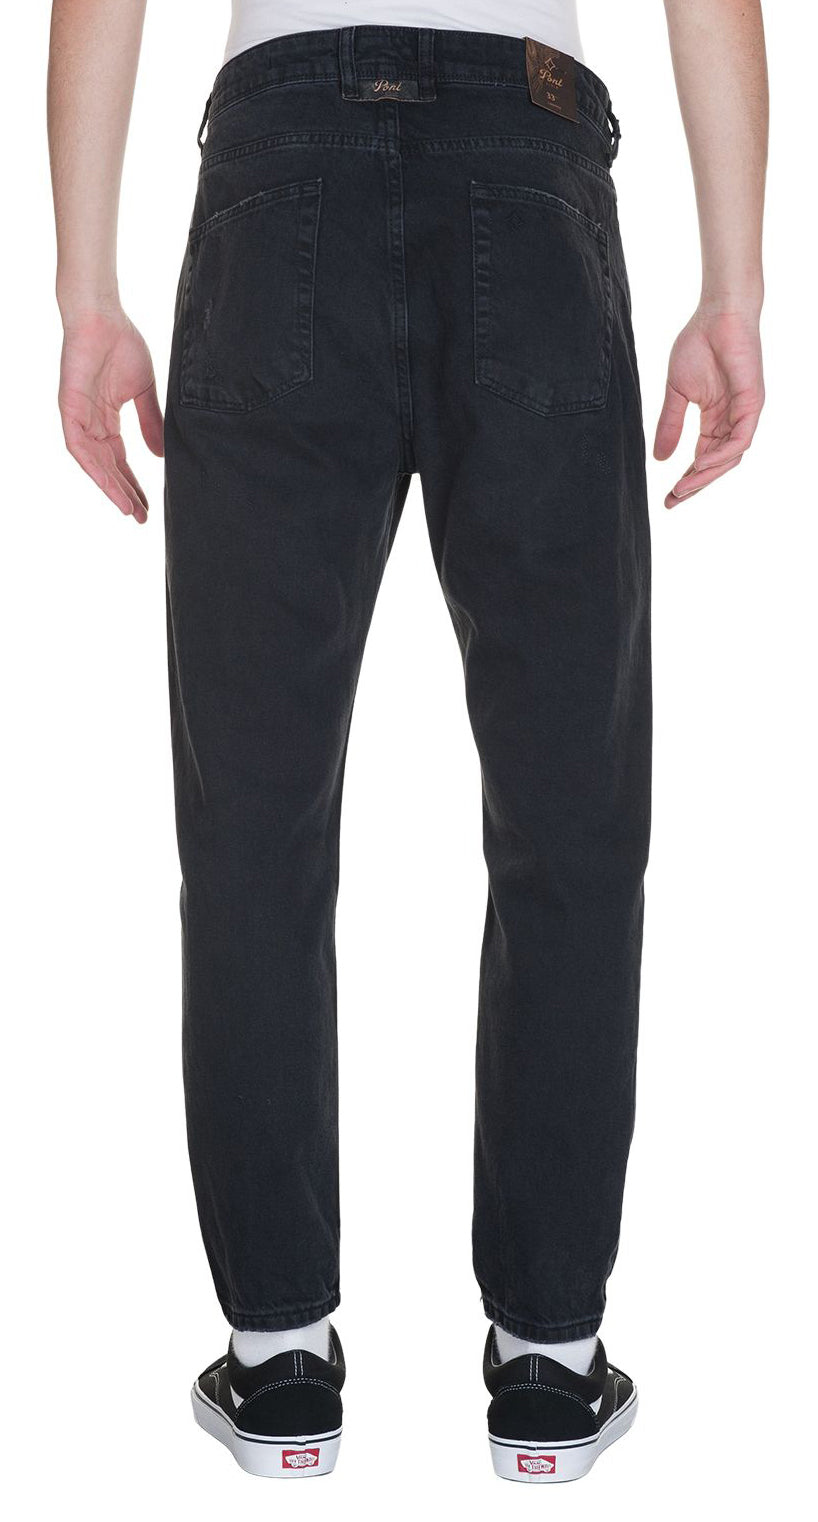  P.grax Pant Denim Jeans Yellowstone Cropped Black Nero Uomo - 2